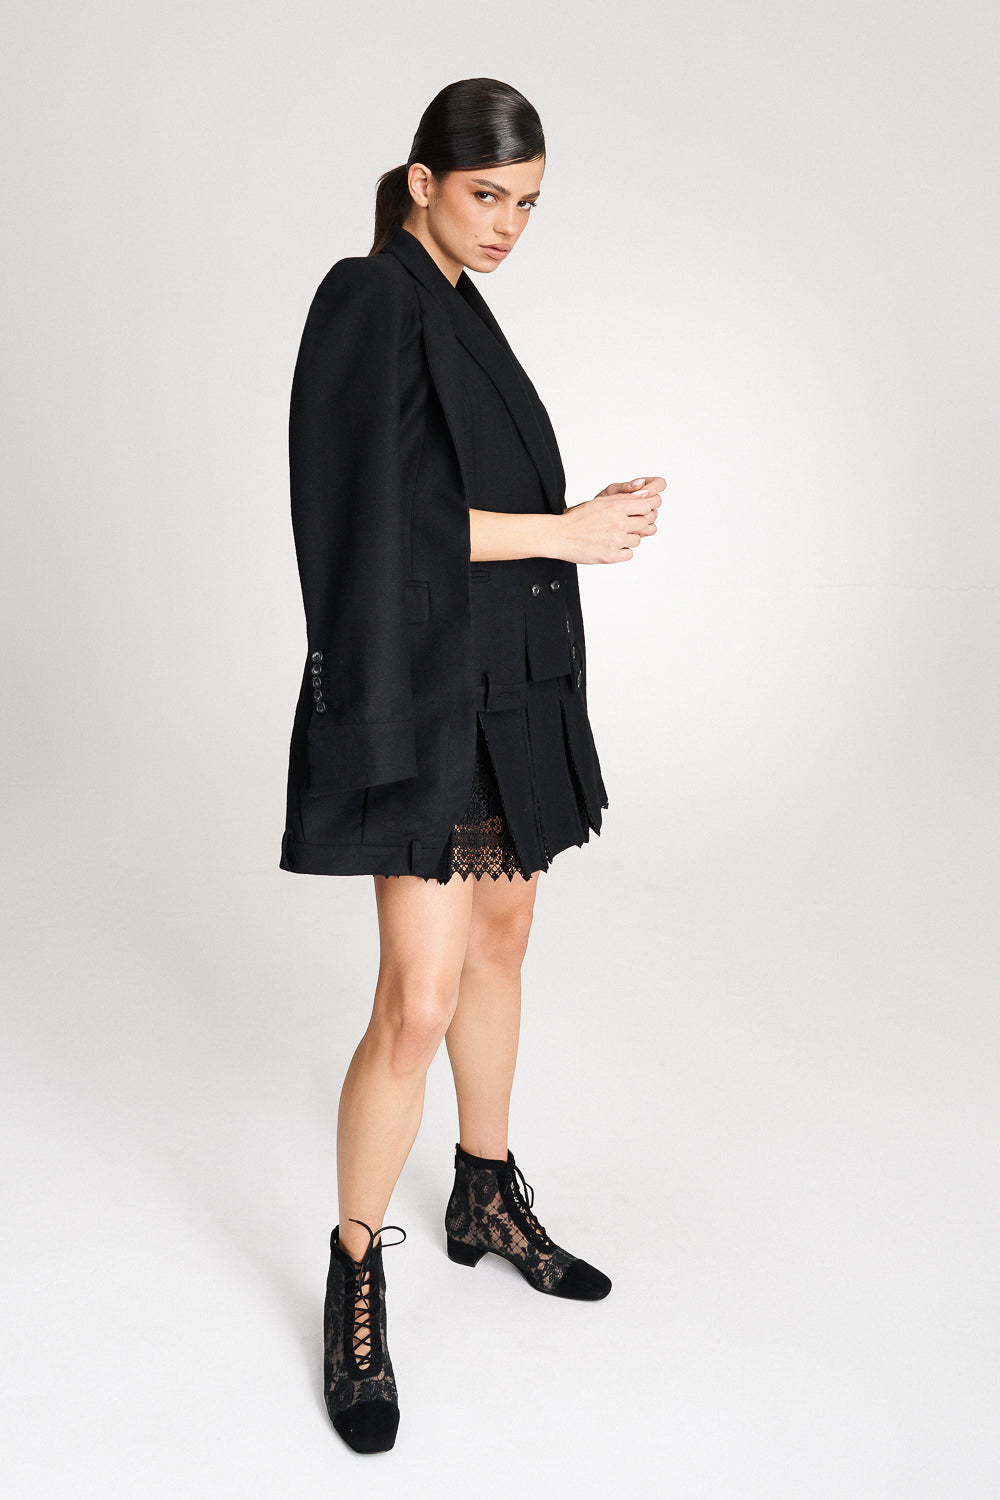 'Lima' Black Wool Layer Suit Blazer with Vest